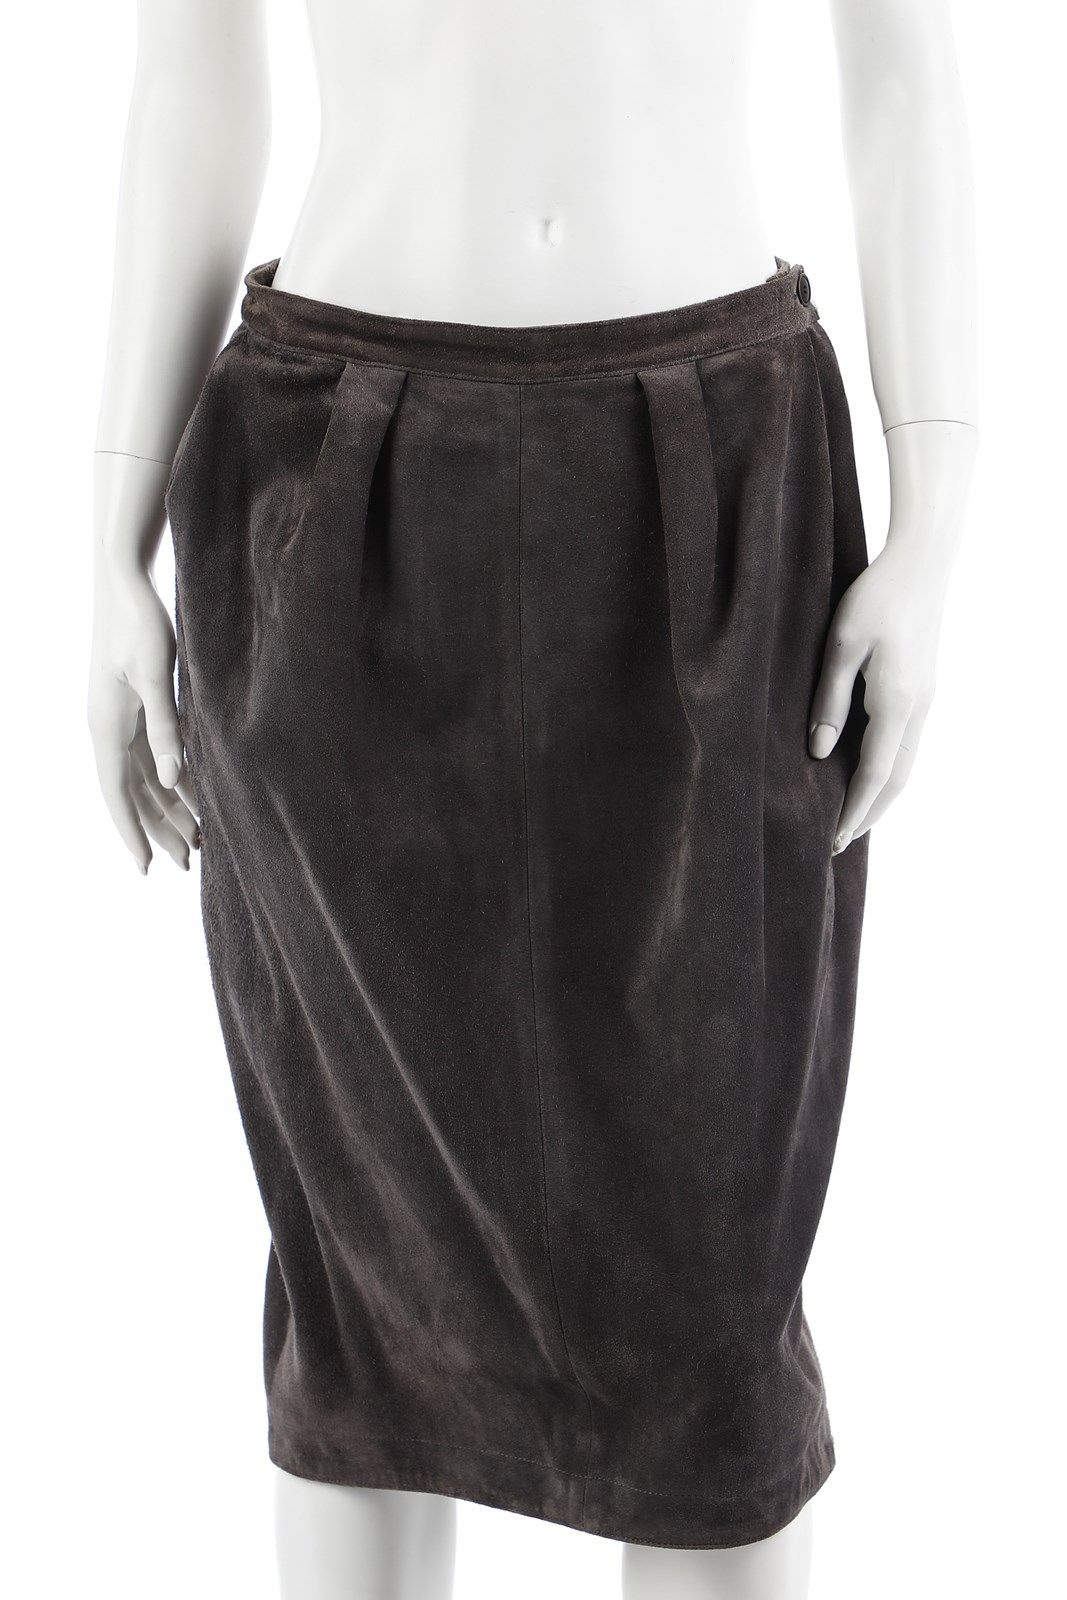 YVES SAINT LAURENT Gray suede leather midi skirt. 灰色绒面皮革半身裙..